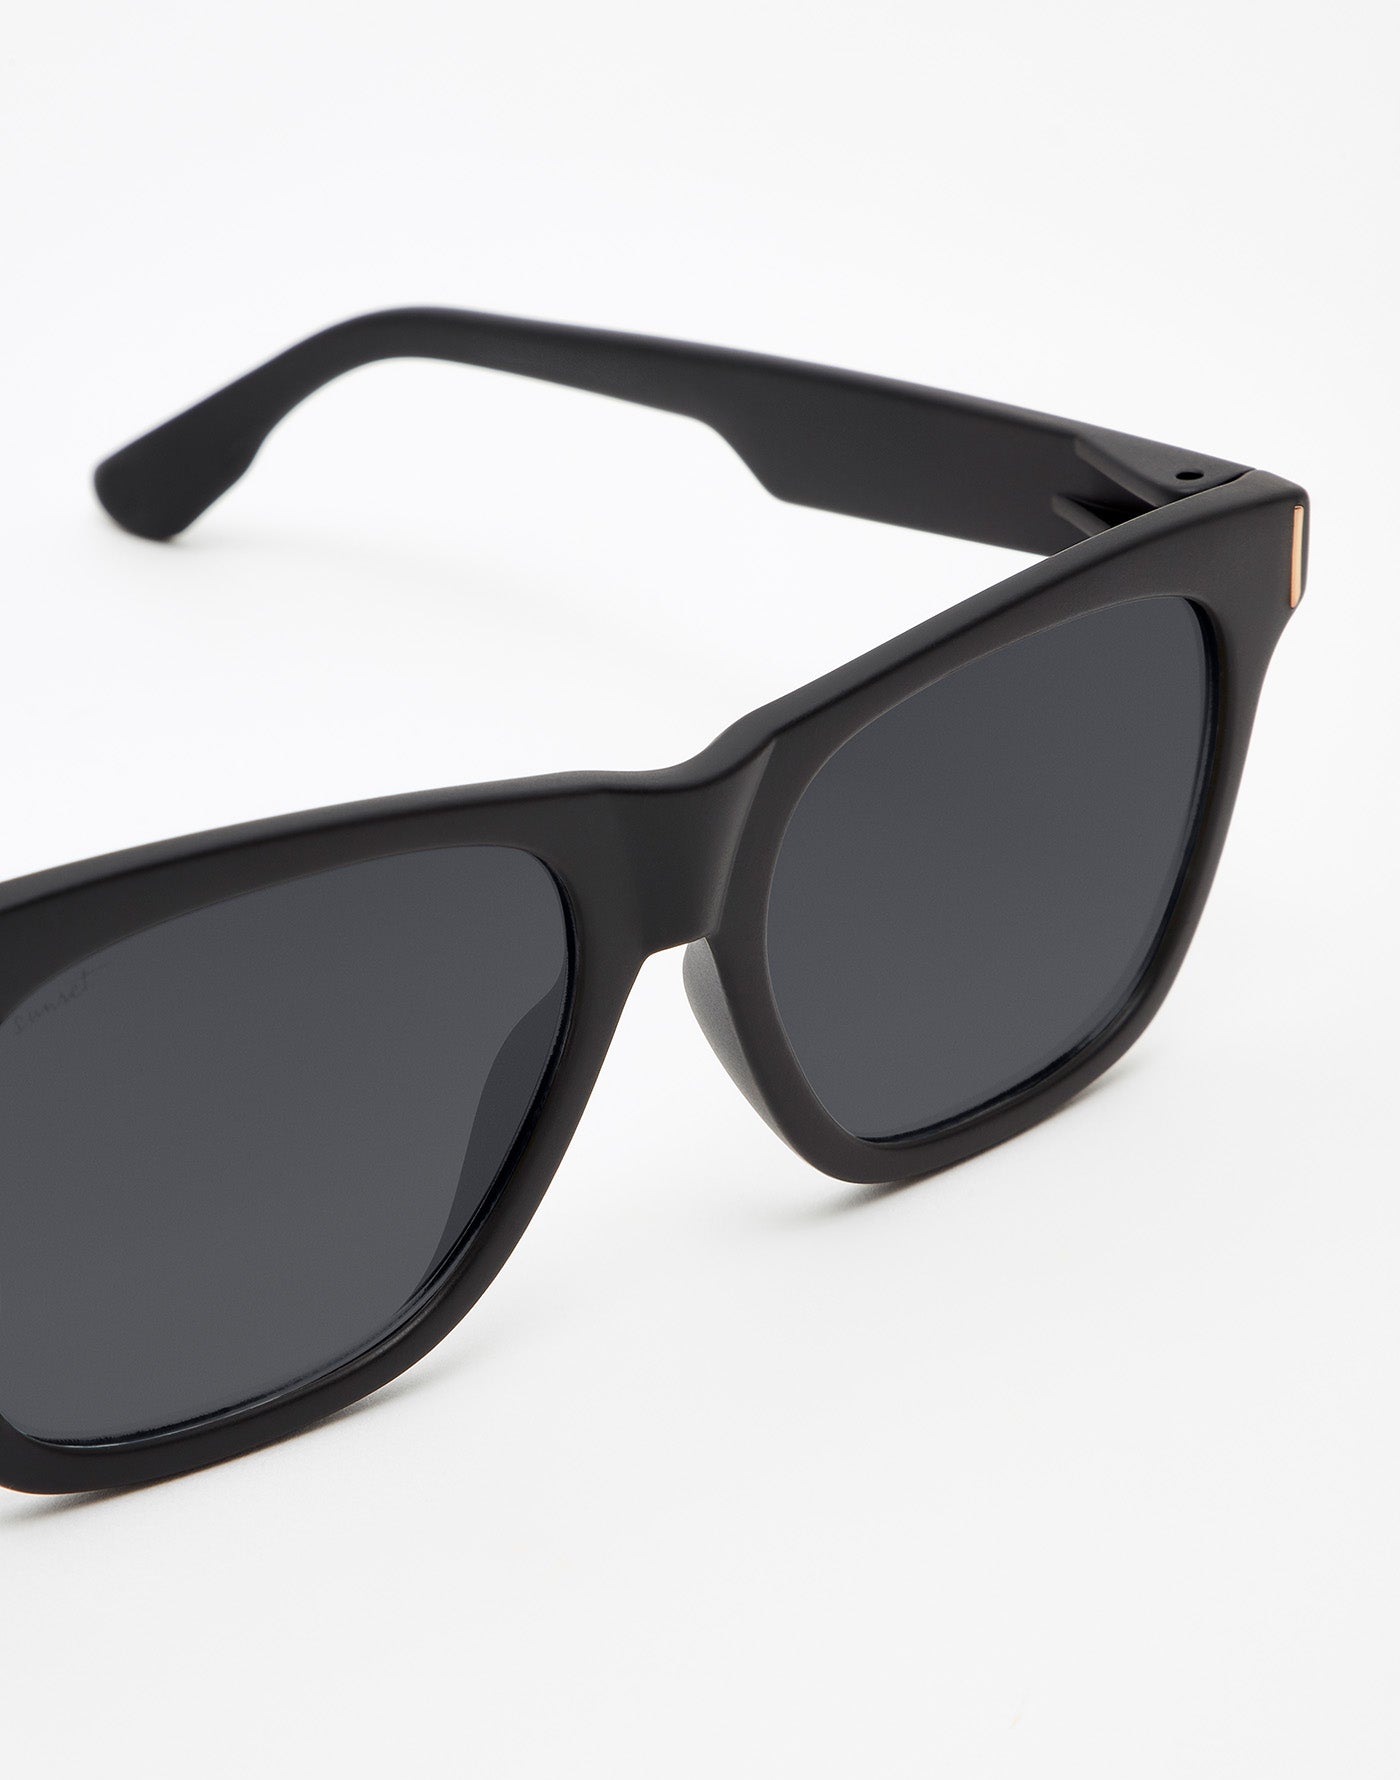 ⊛ Gafas de Sol Hawkers® Carbon Black Dark Sunset ⊛